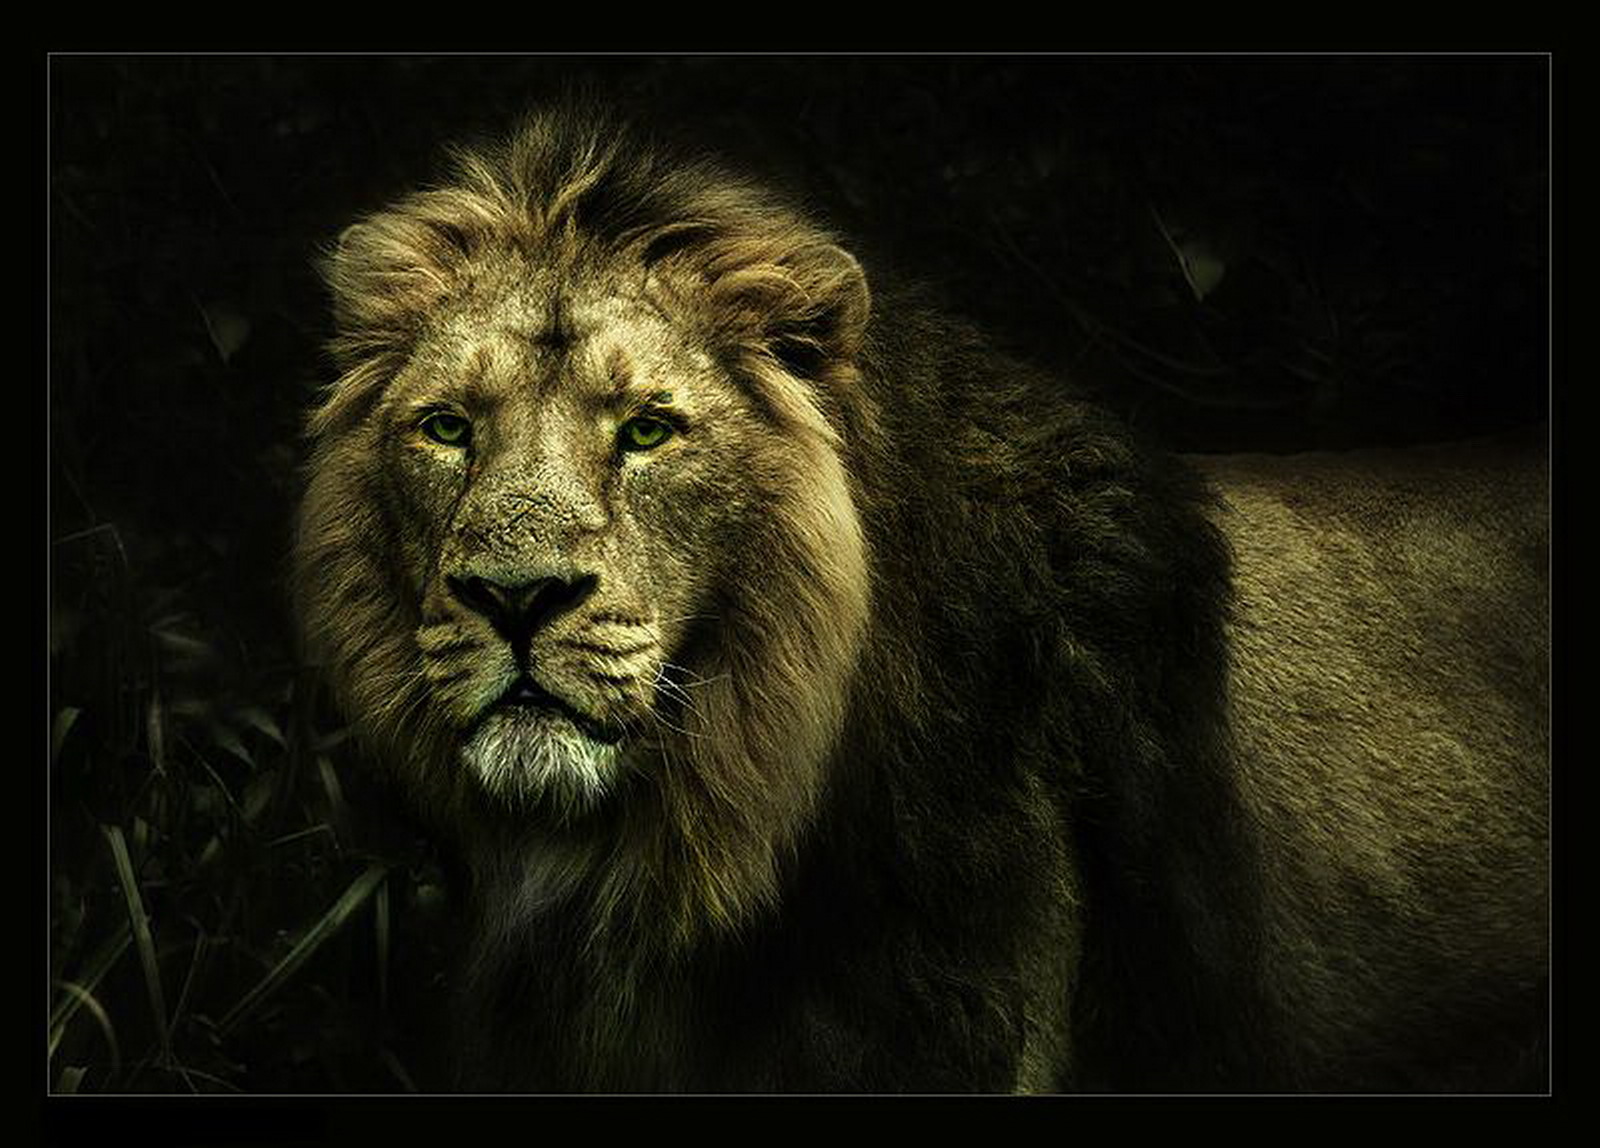 Lion Hd Wallpapers, Free Wallpaper Downloads, Lion - King Of The Jungle Hd - HD Wallpaper 